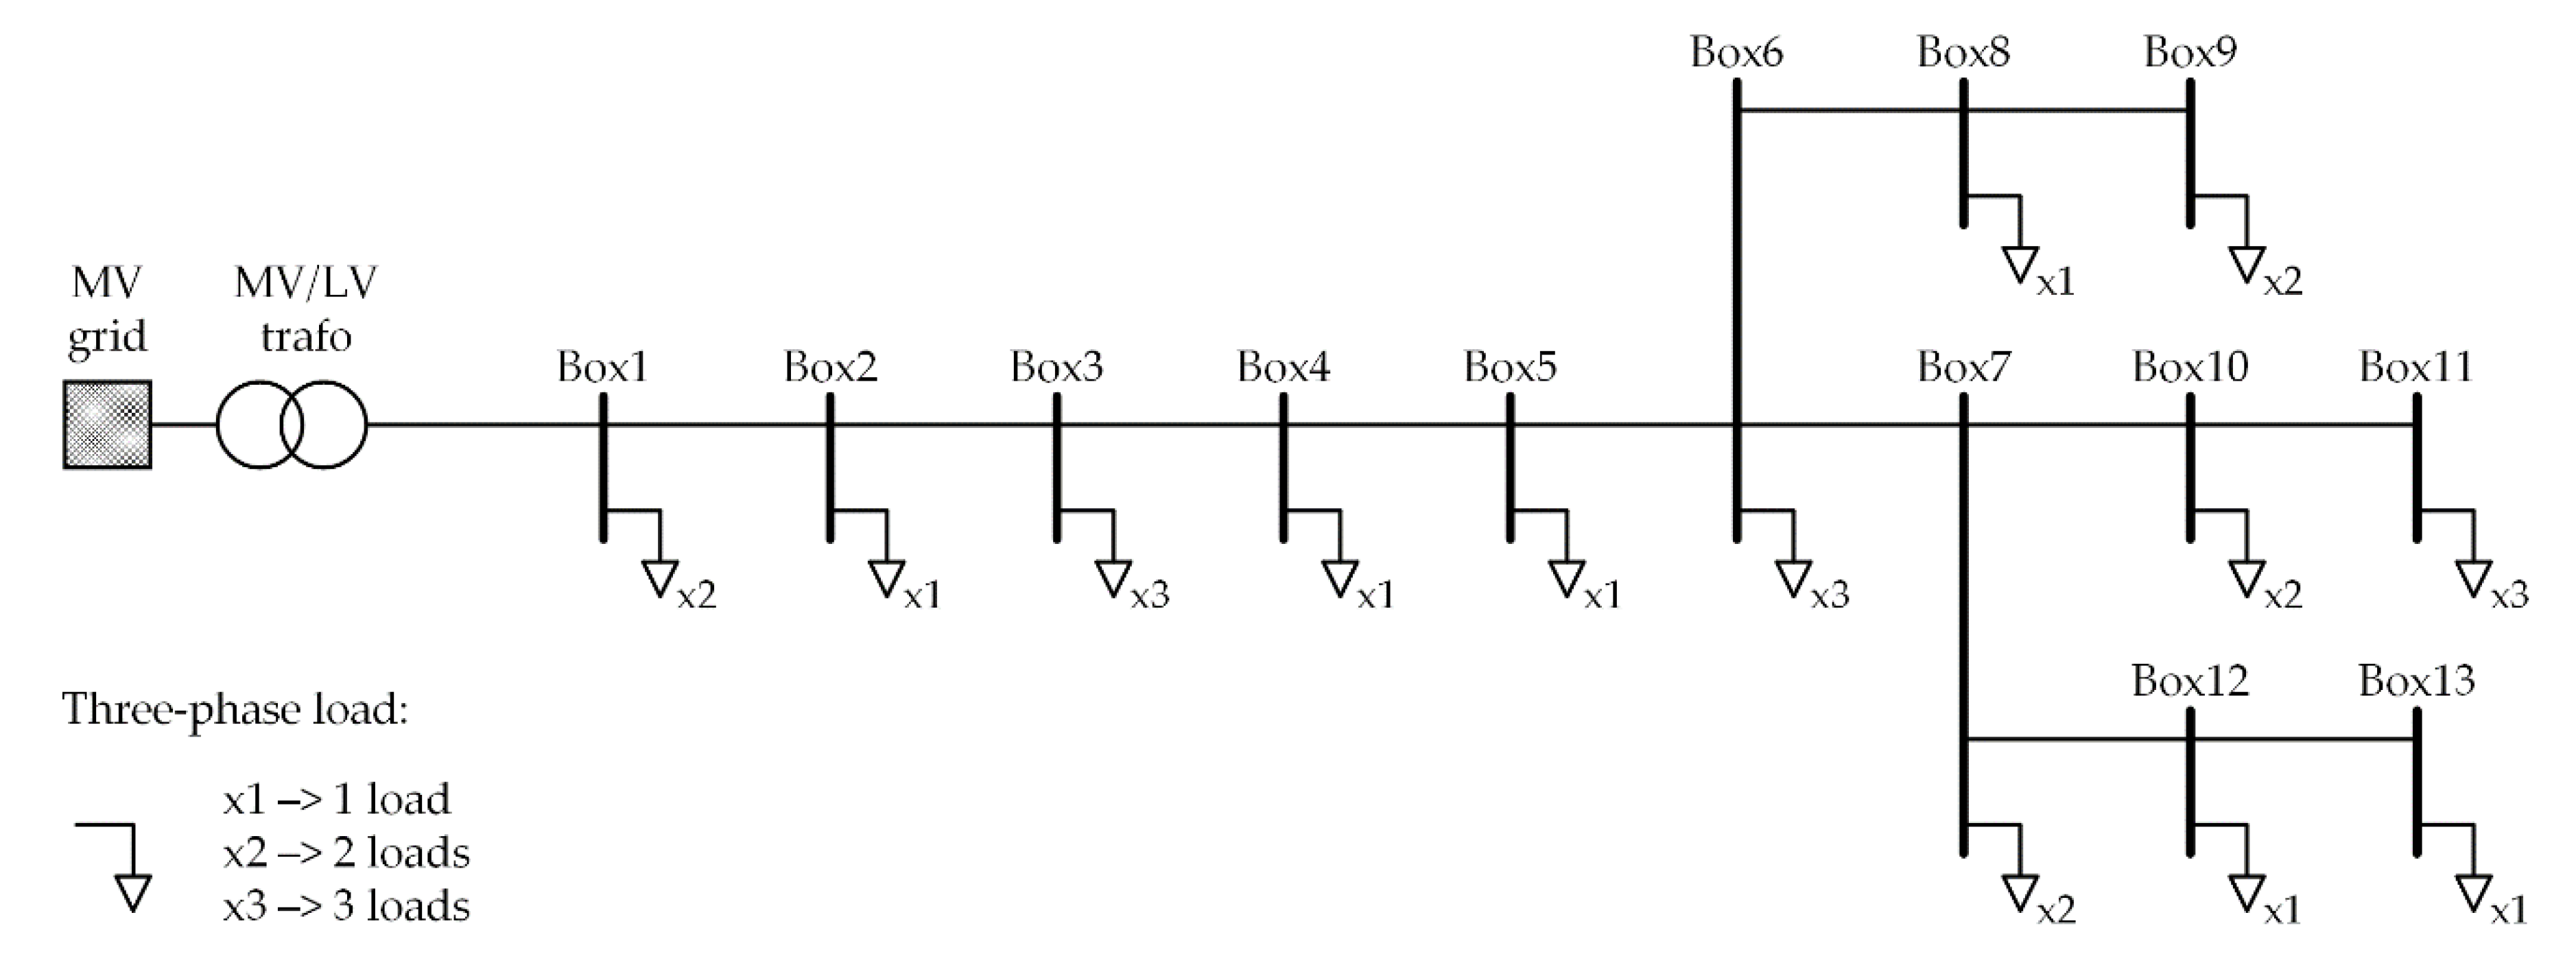 Single-line diagram of low-voltage (LV) network of building [21].